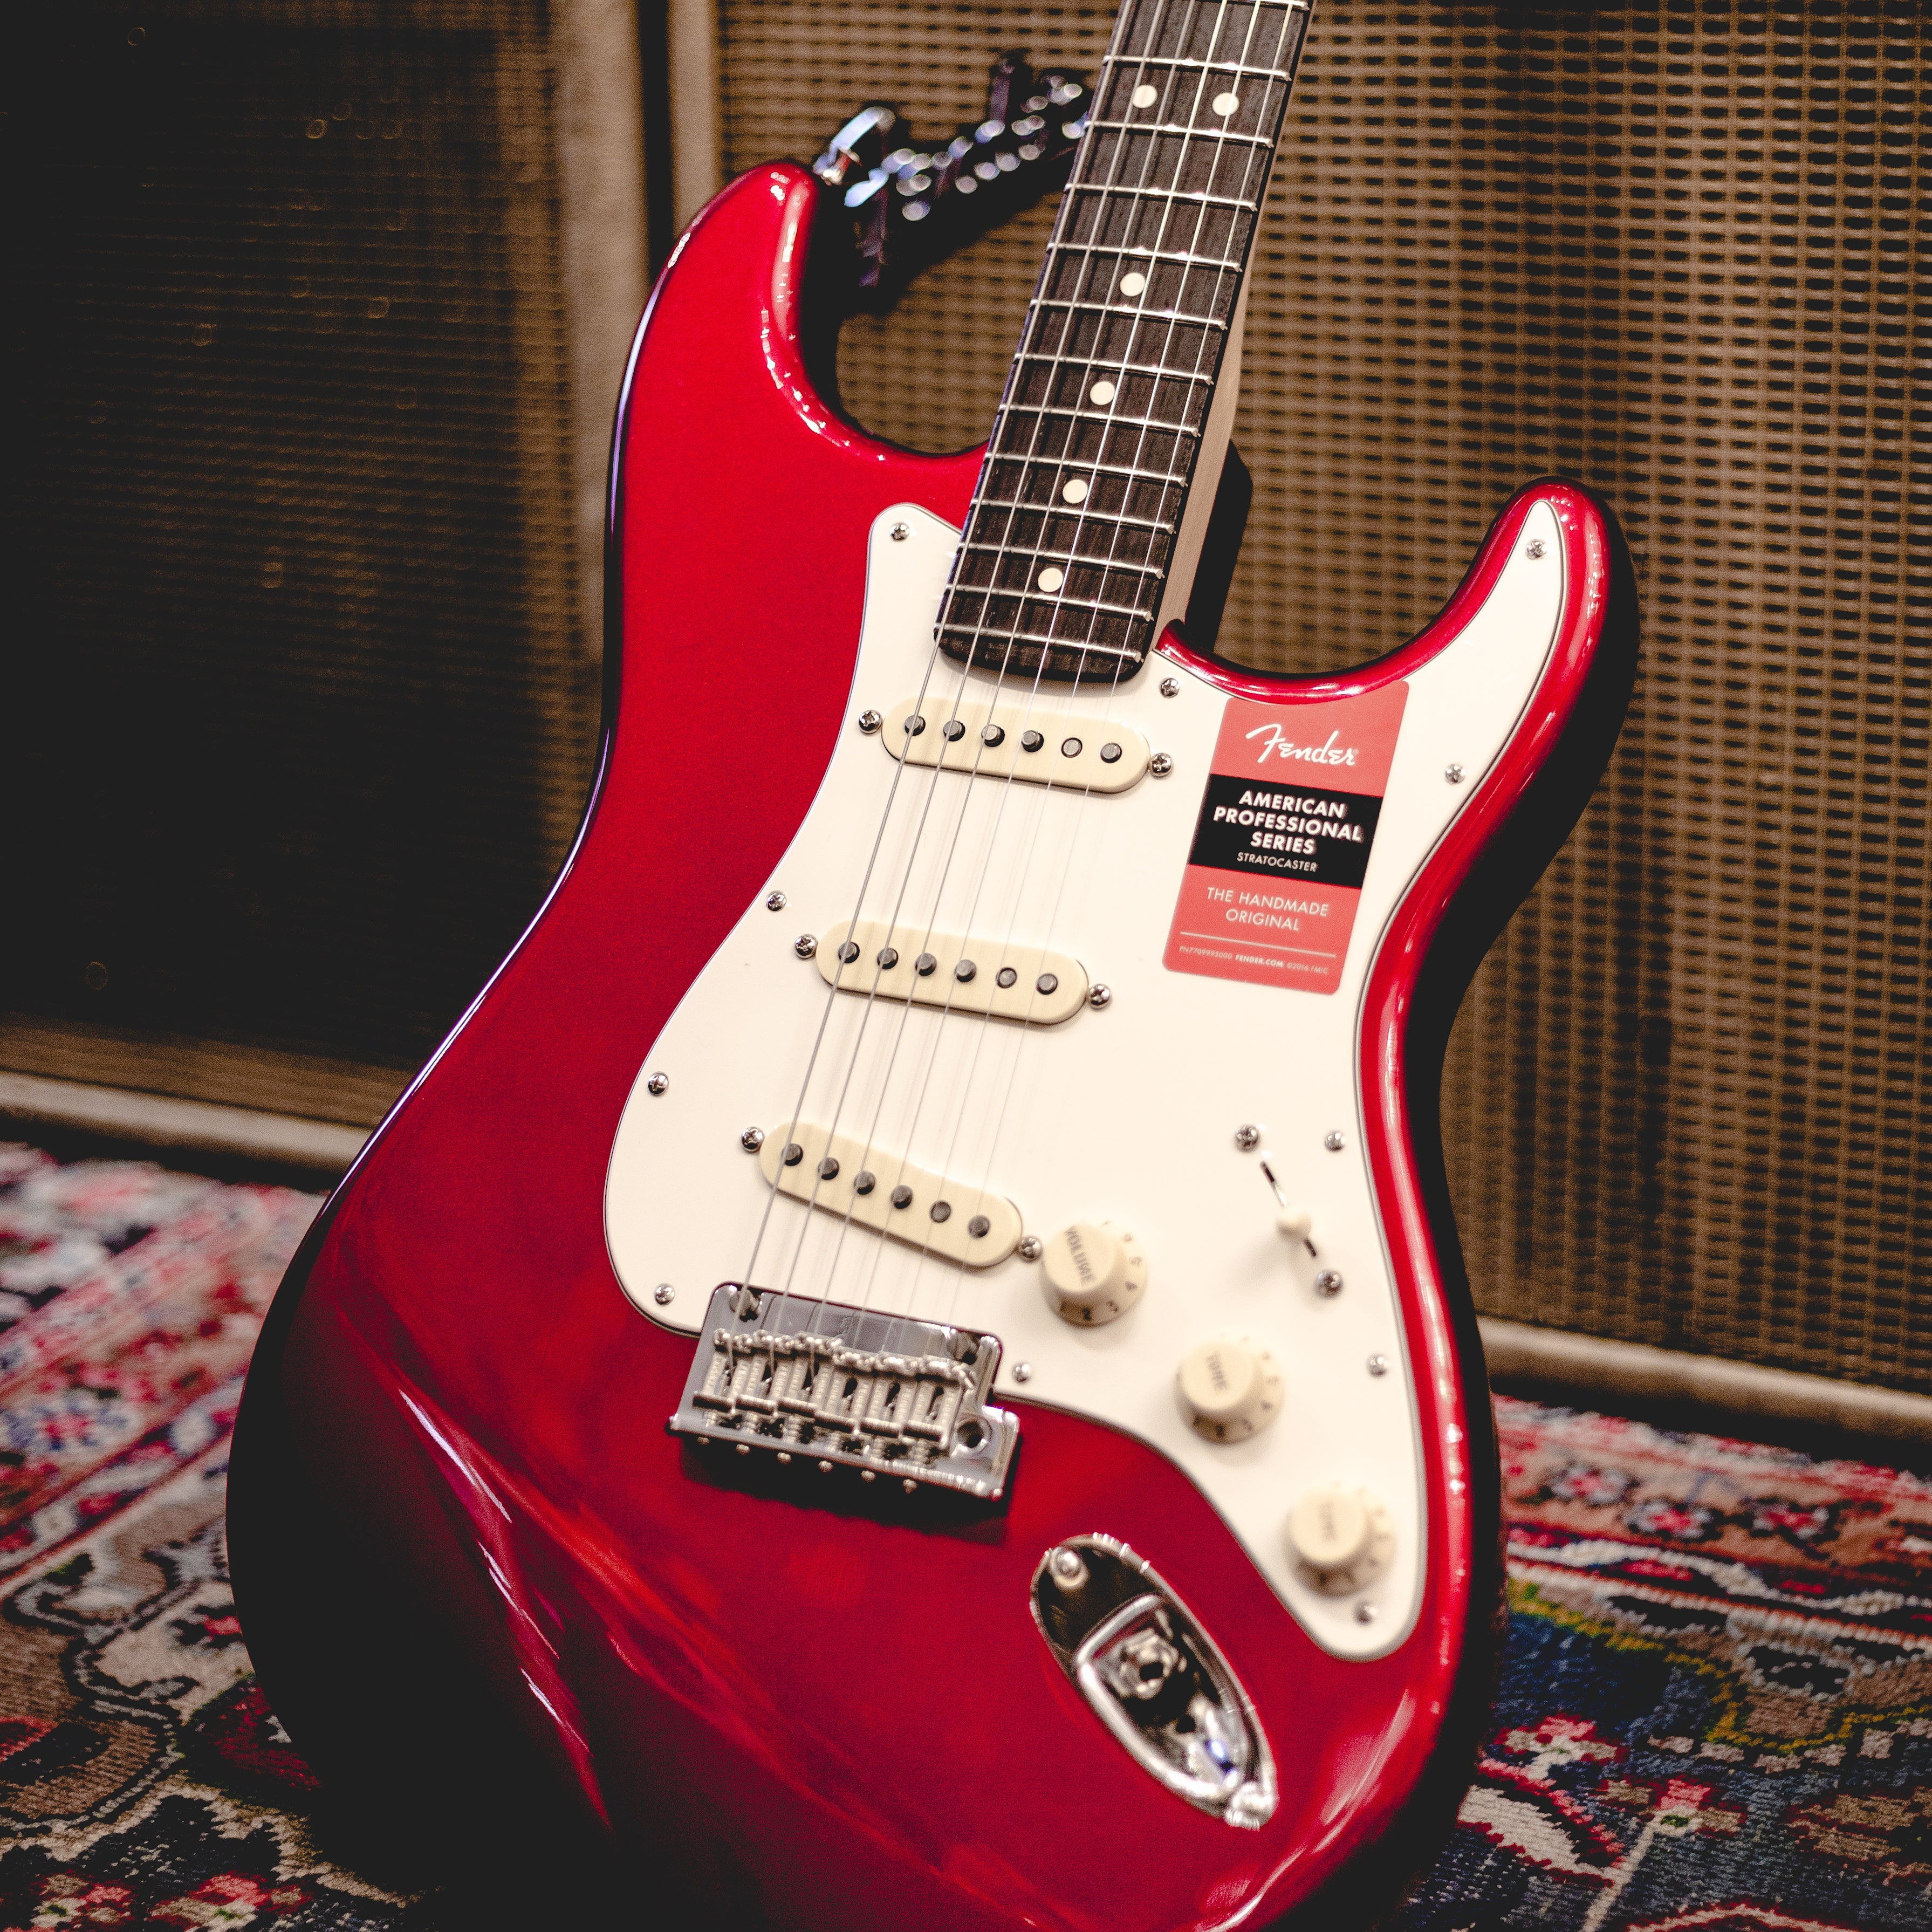 Focus on Sound Returns: Fender American Performer vs. Professional Strats